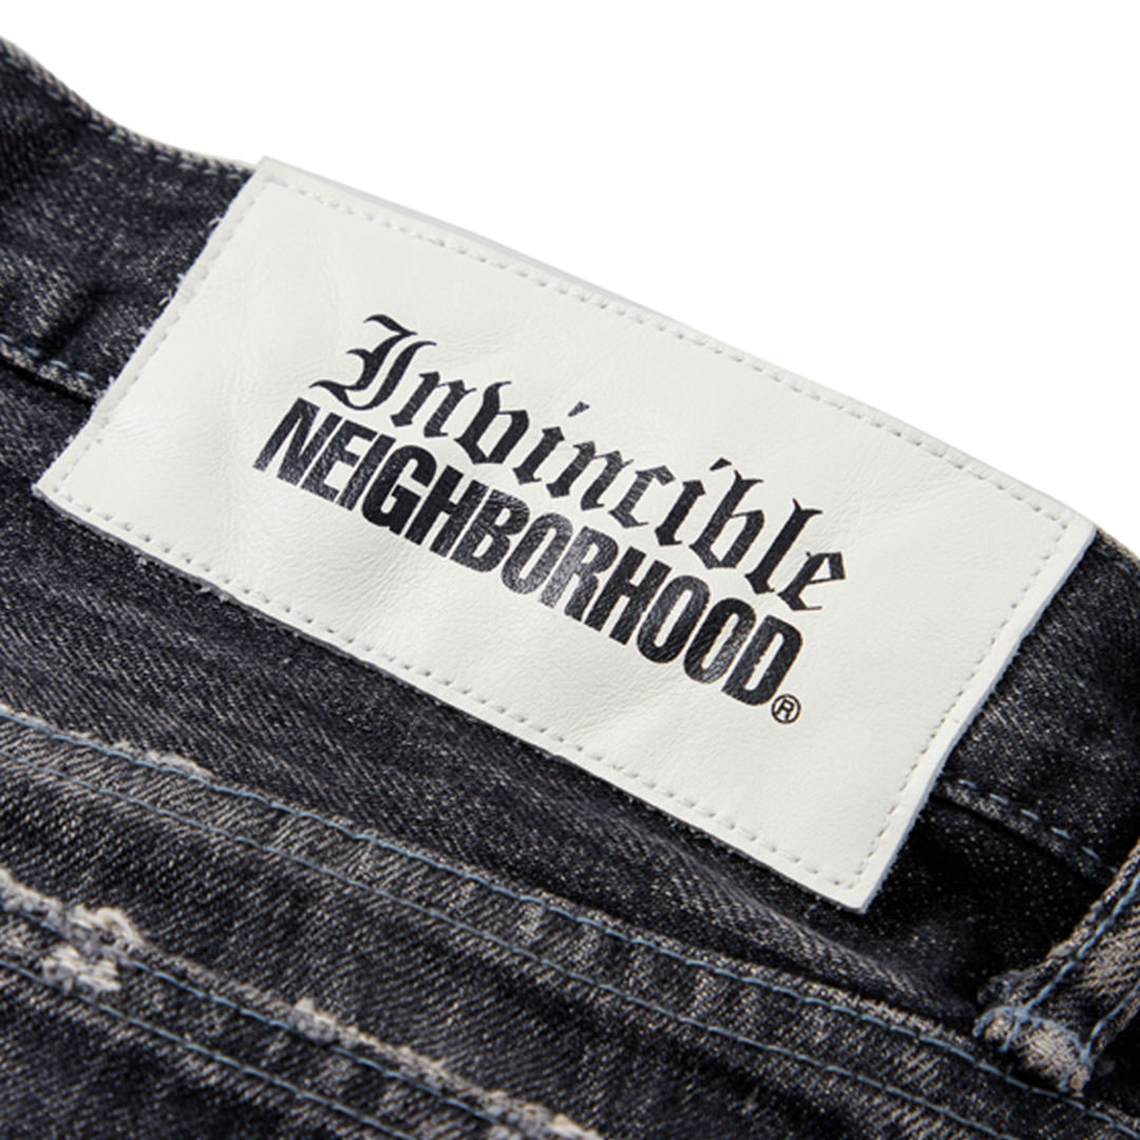 Invincible Neighborhood Adidas Consortium Campus Release Date 11